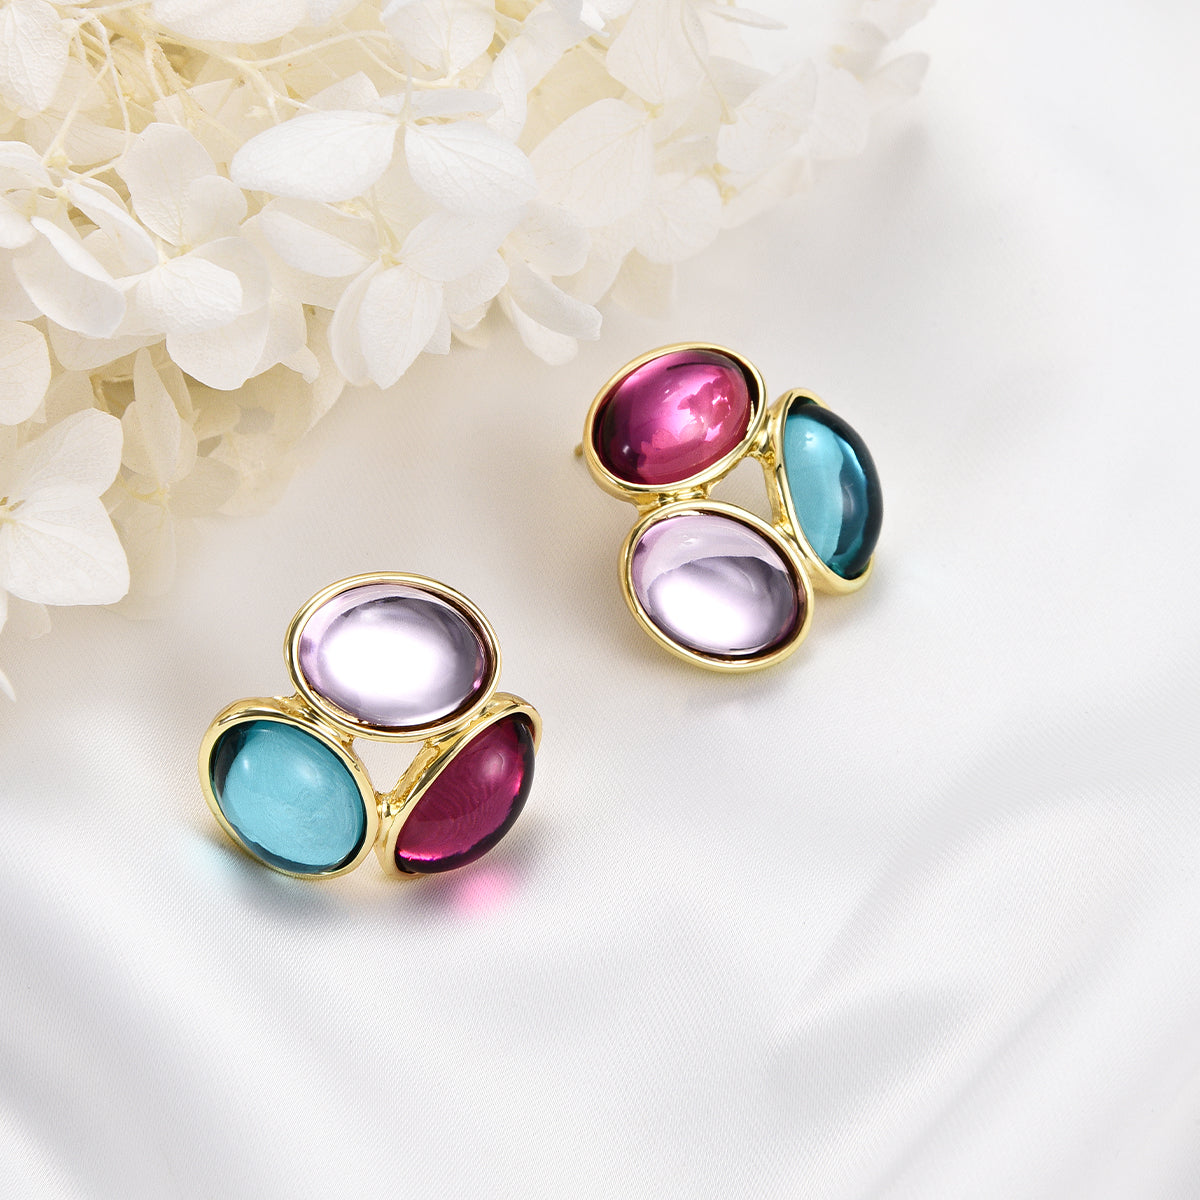 Embellished colorful eye-candy golden earrings